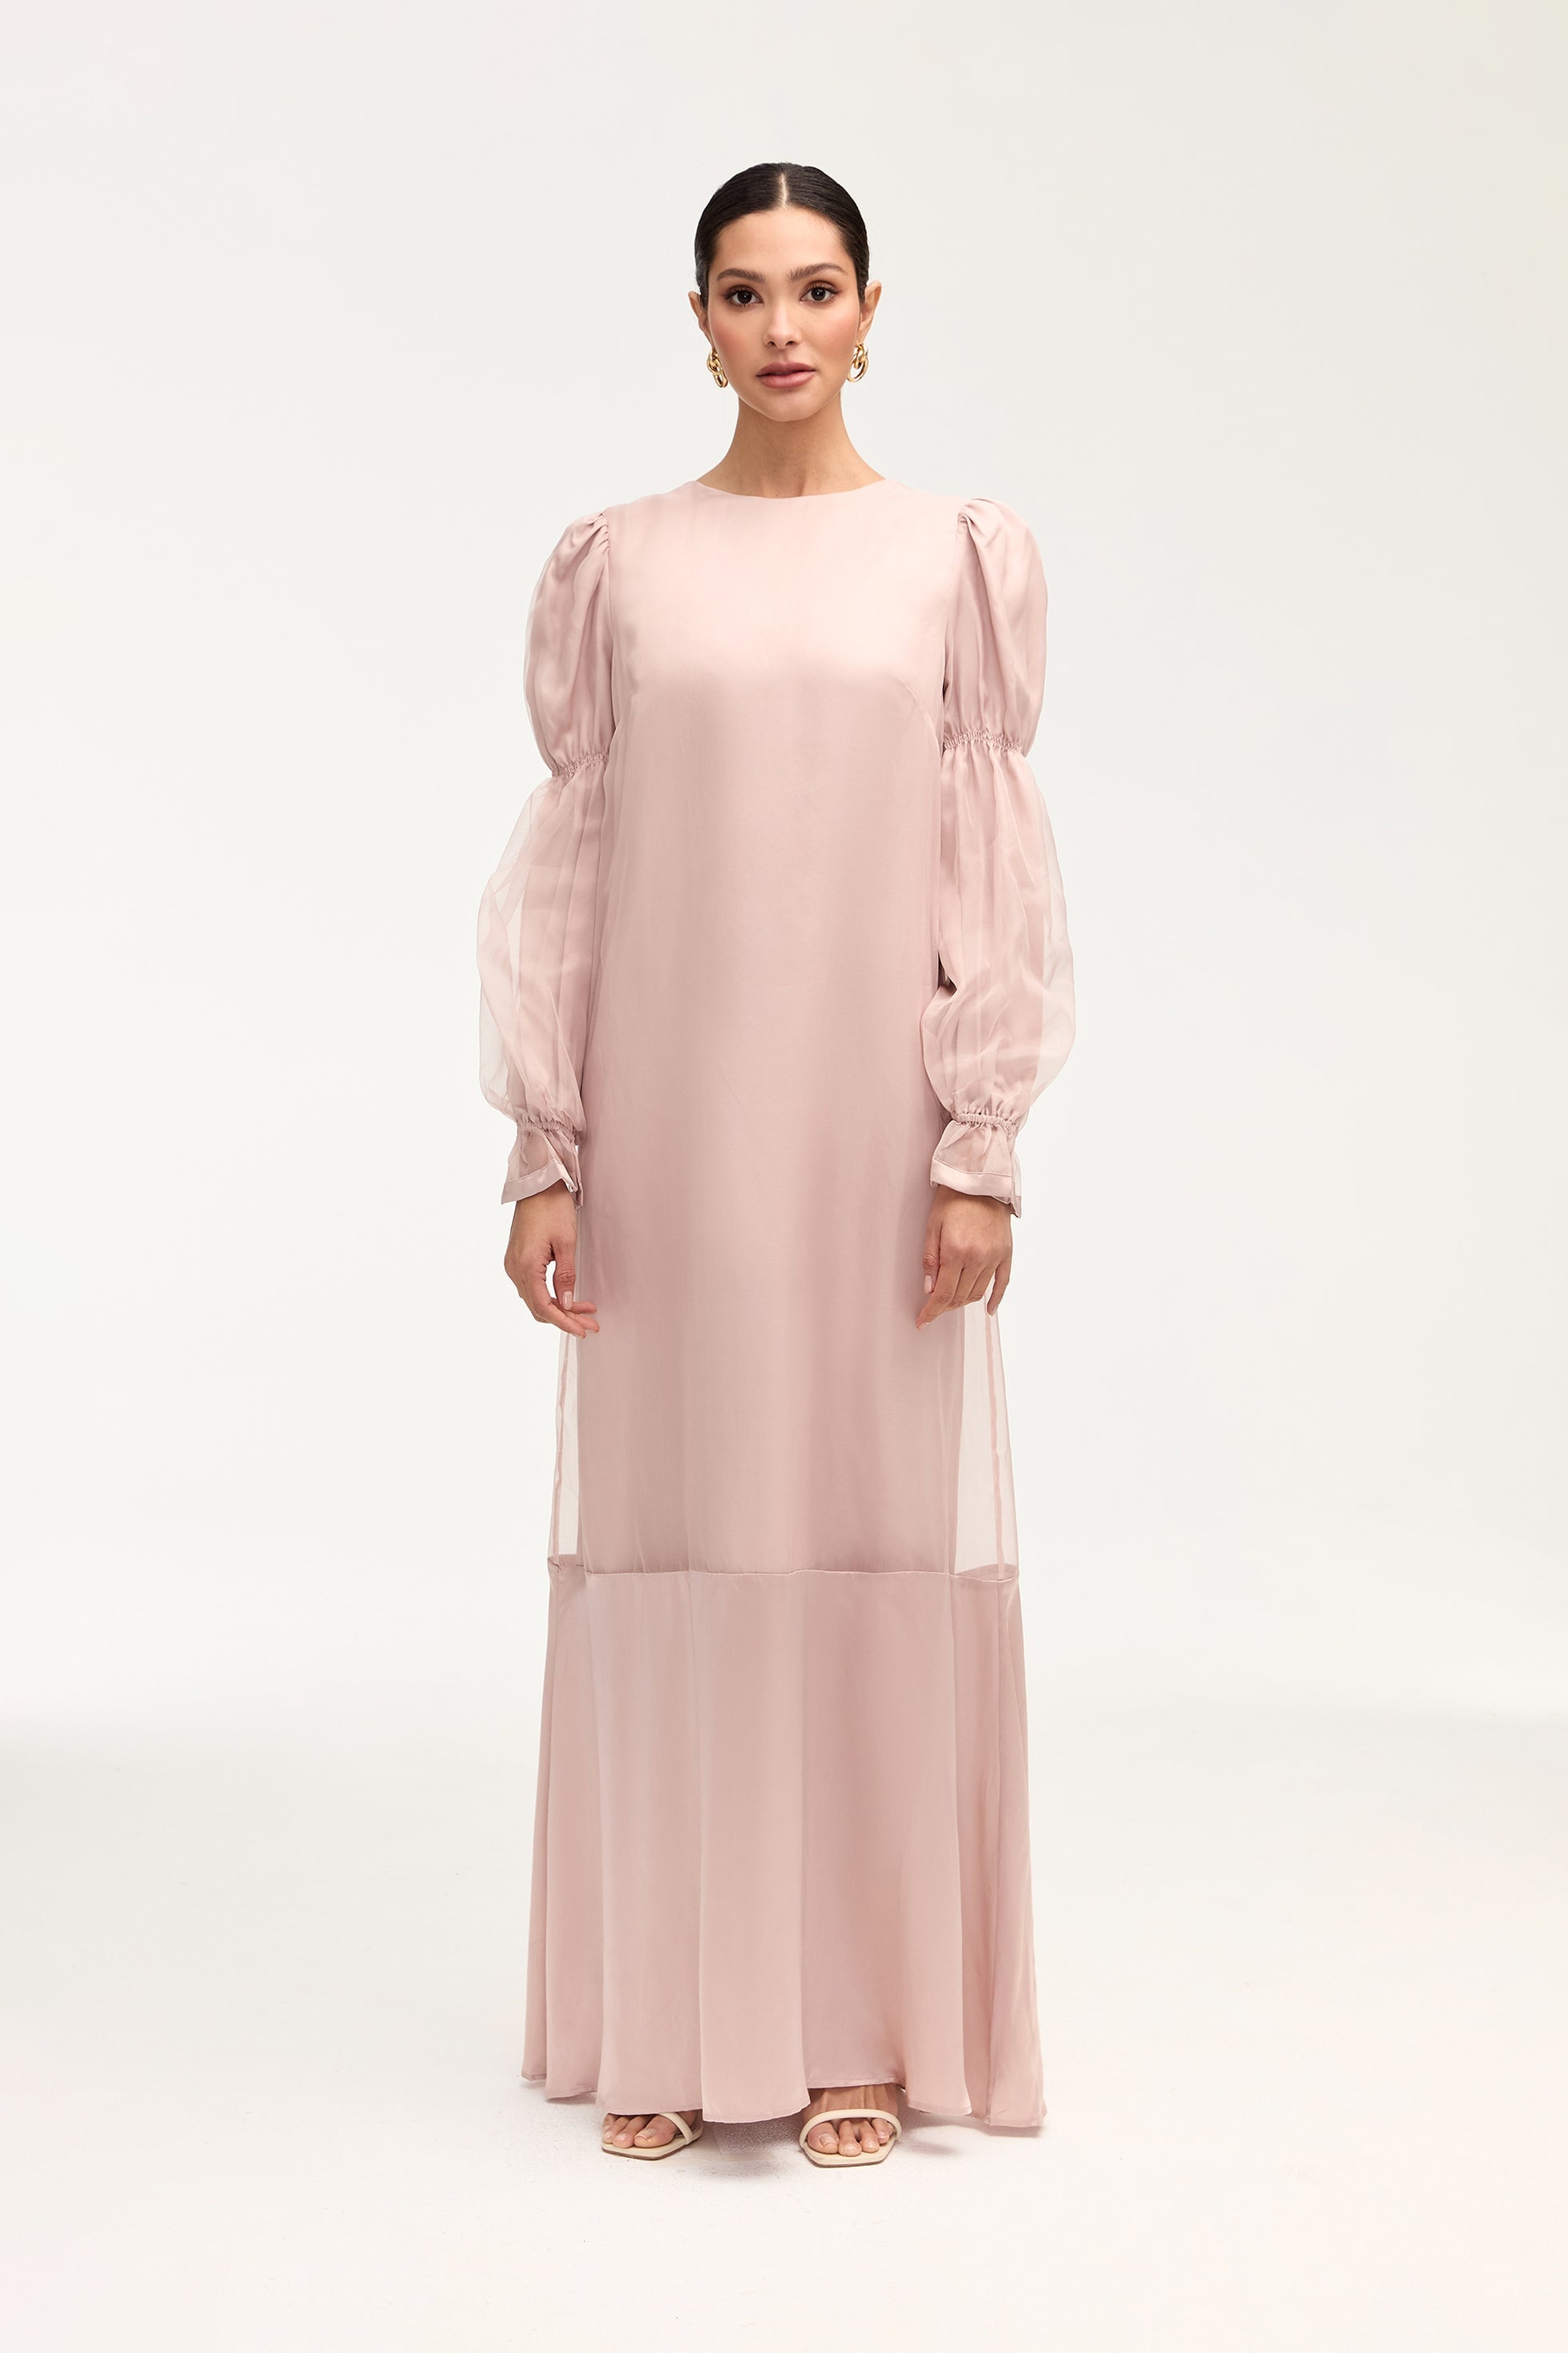 Silk Organza Satin Trim Maxi Dress - Sepia Rose Dresses Veiled 